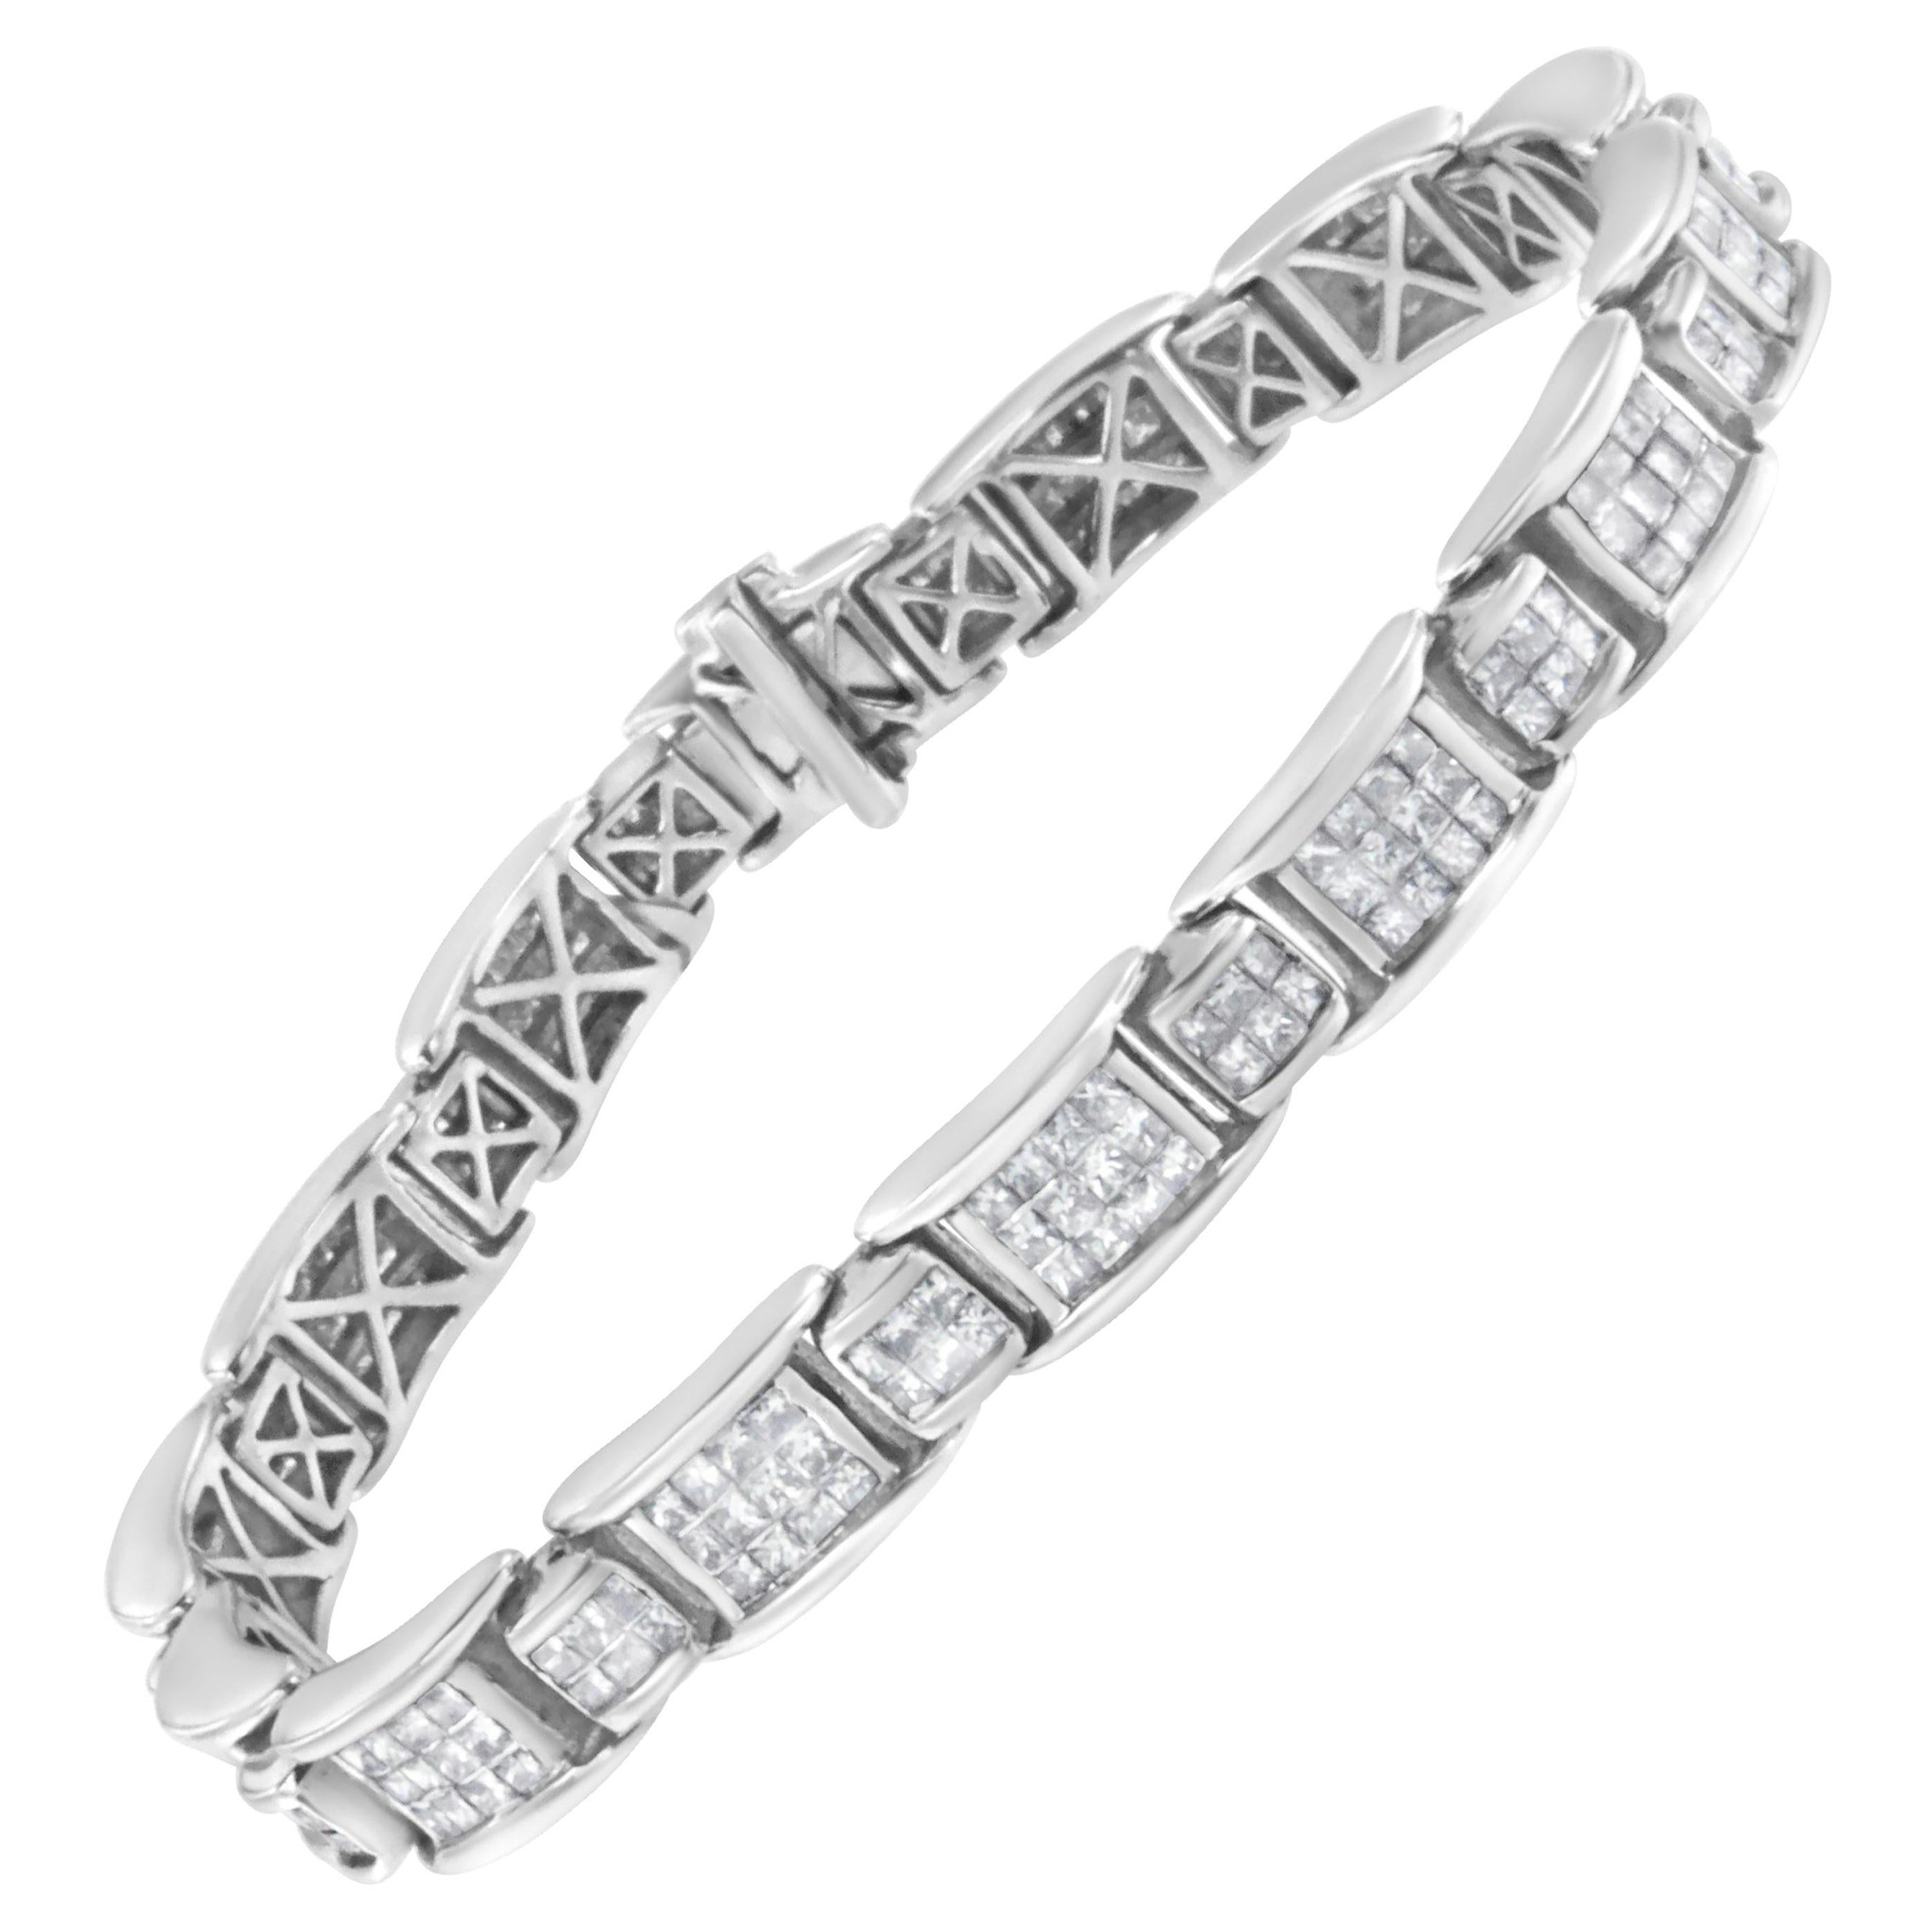 14K White Gold 5.0 Carat Diamond Link Bracelet